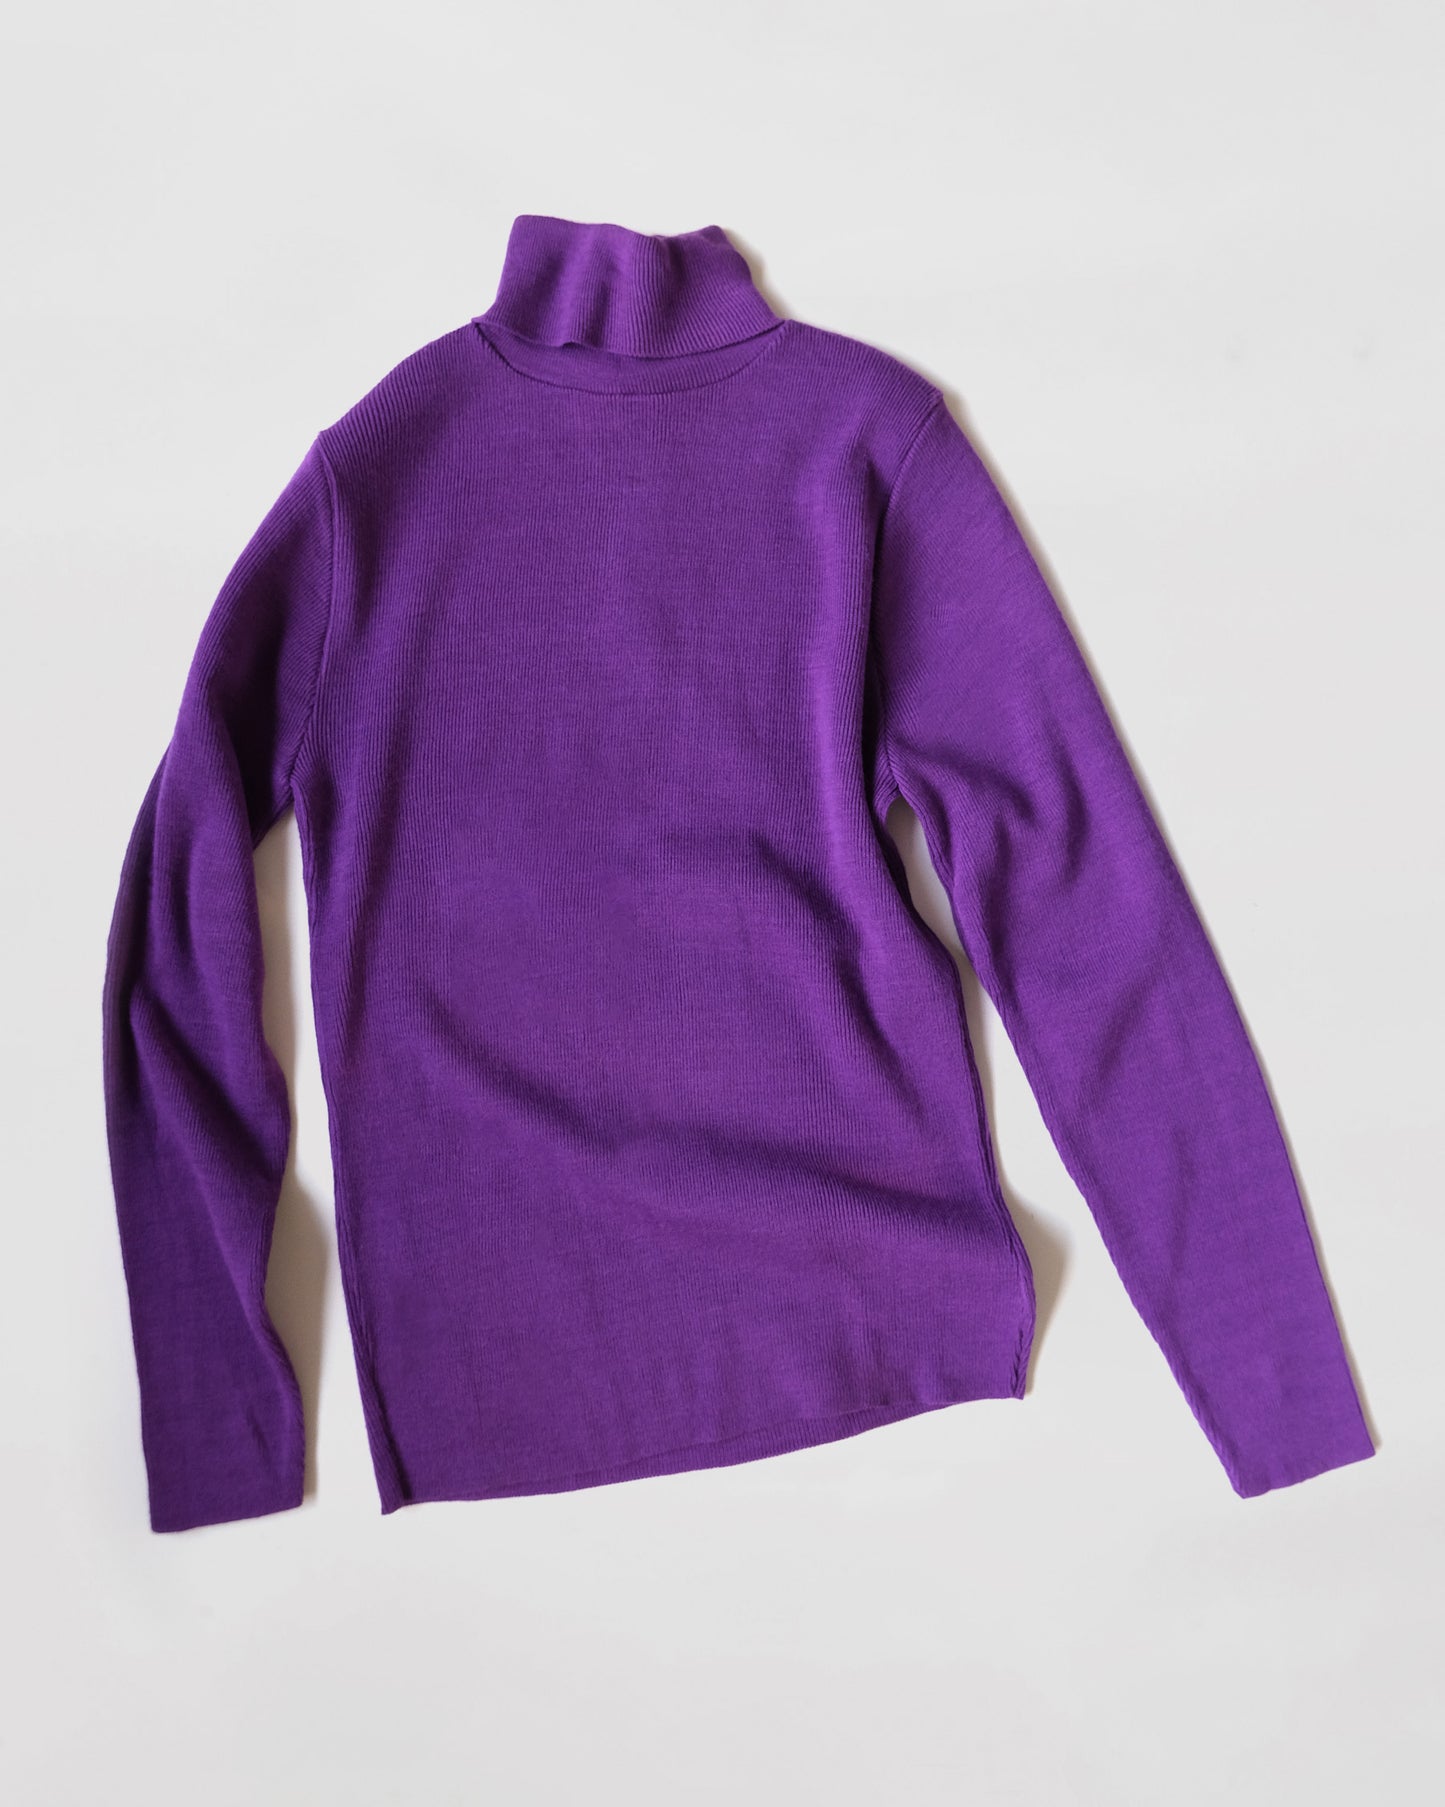 NOS Turtleneck Sweater with Back Zippier - Purple